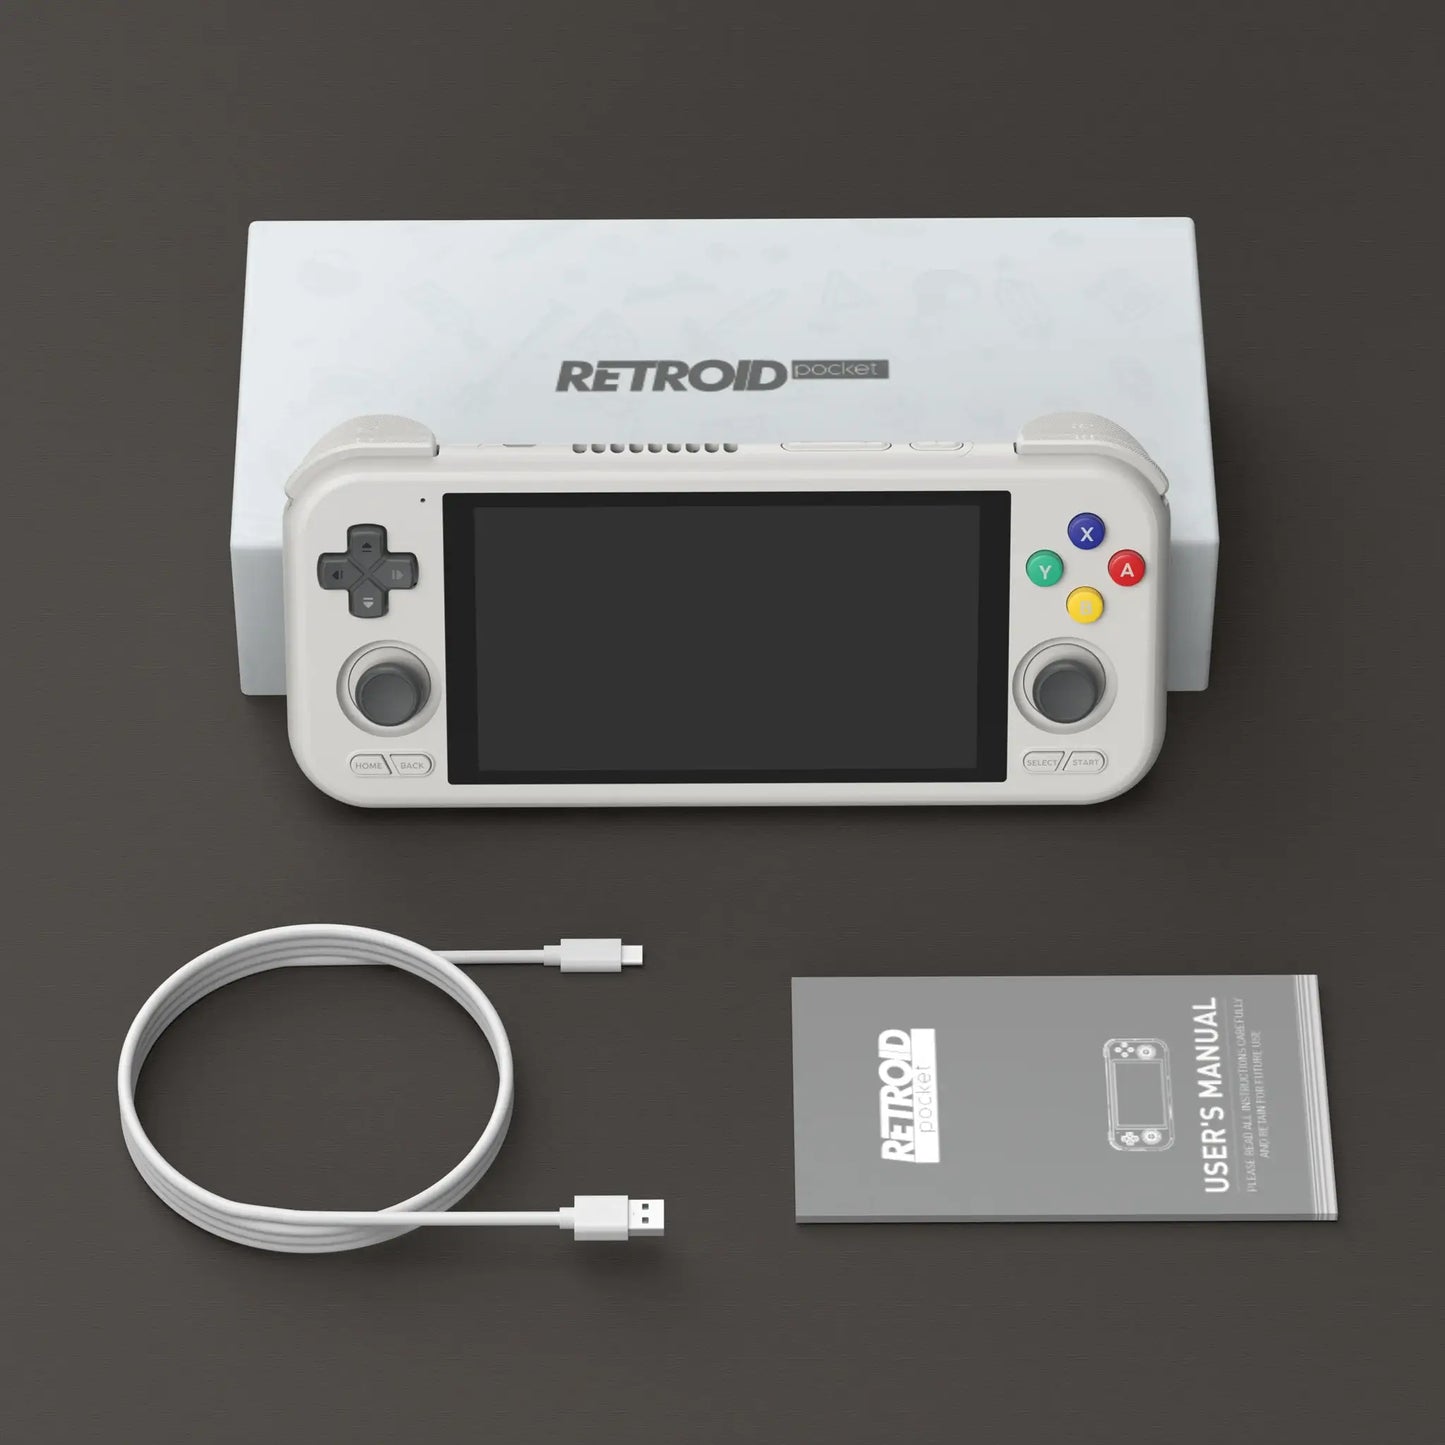 Retroid Pocket 4 Pro 384GB (SanDisk Ultra) Black - Retro Gaming Console + Carry Case